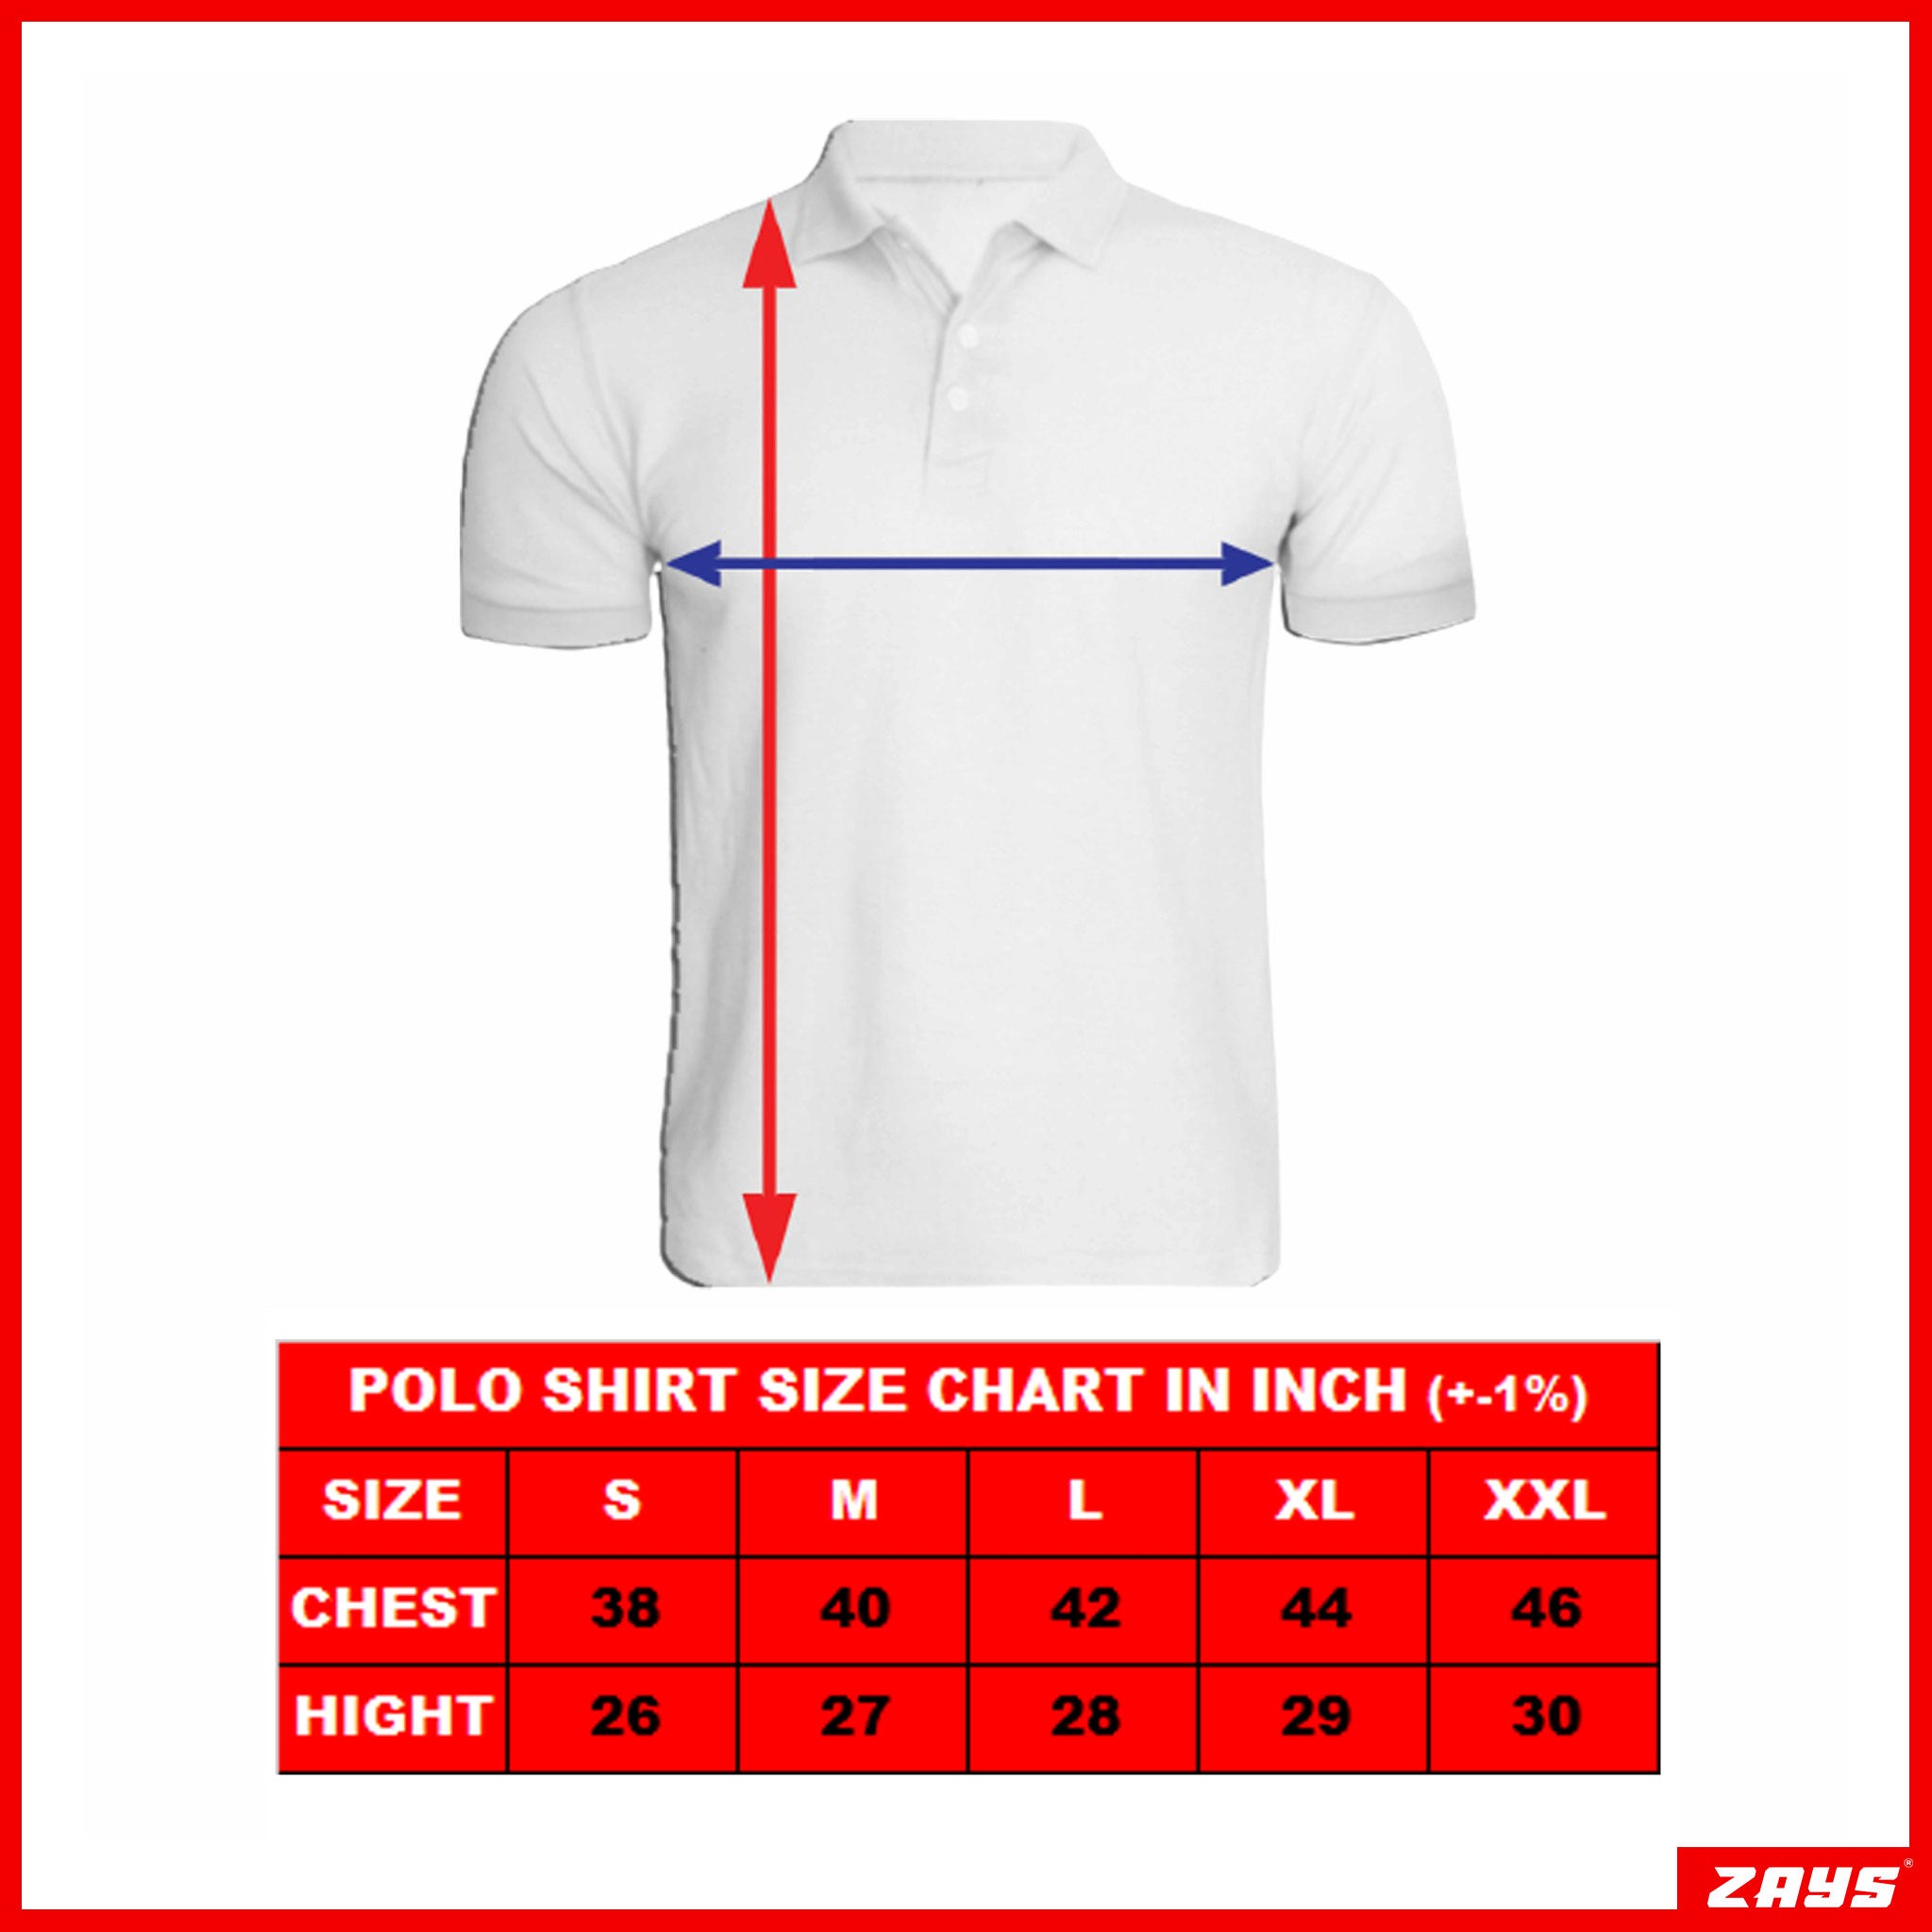 Imported Super Premium Cotton Polo Shirt For Men (ZAYSIPS37) - Bottle Green